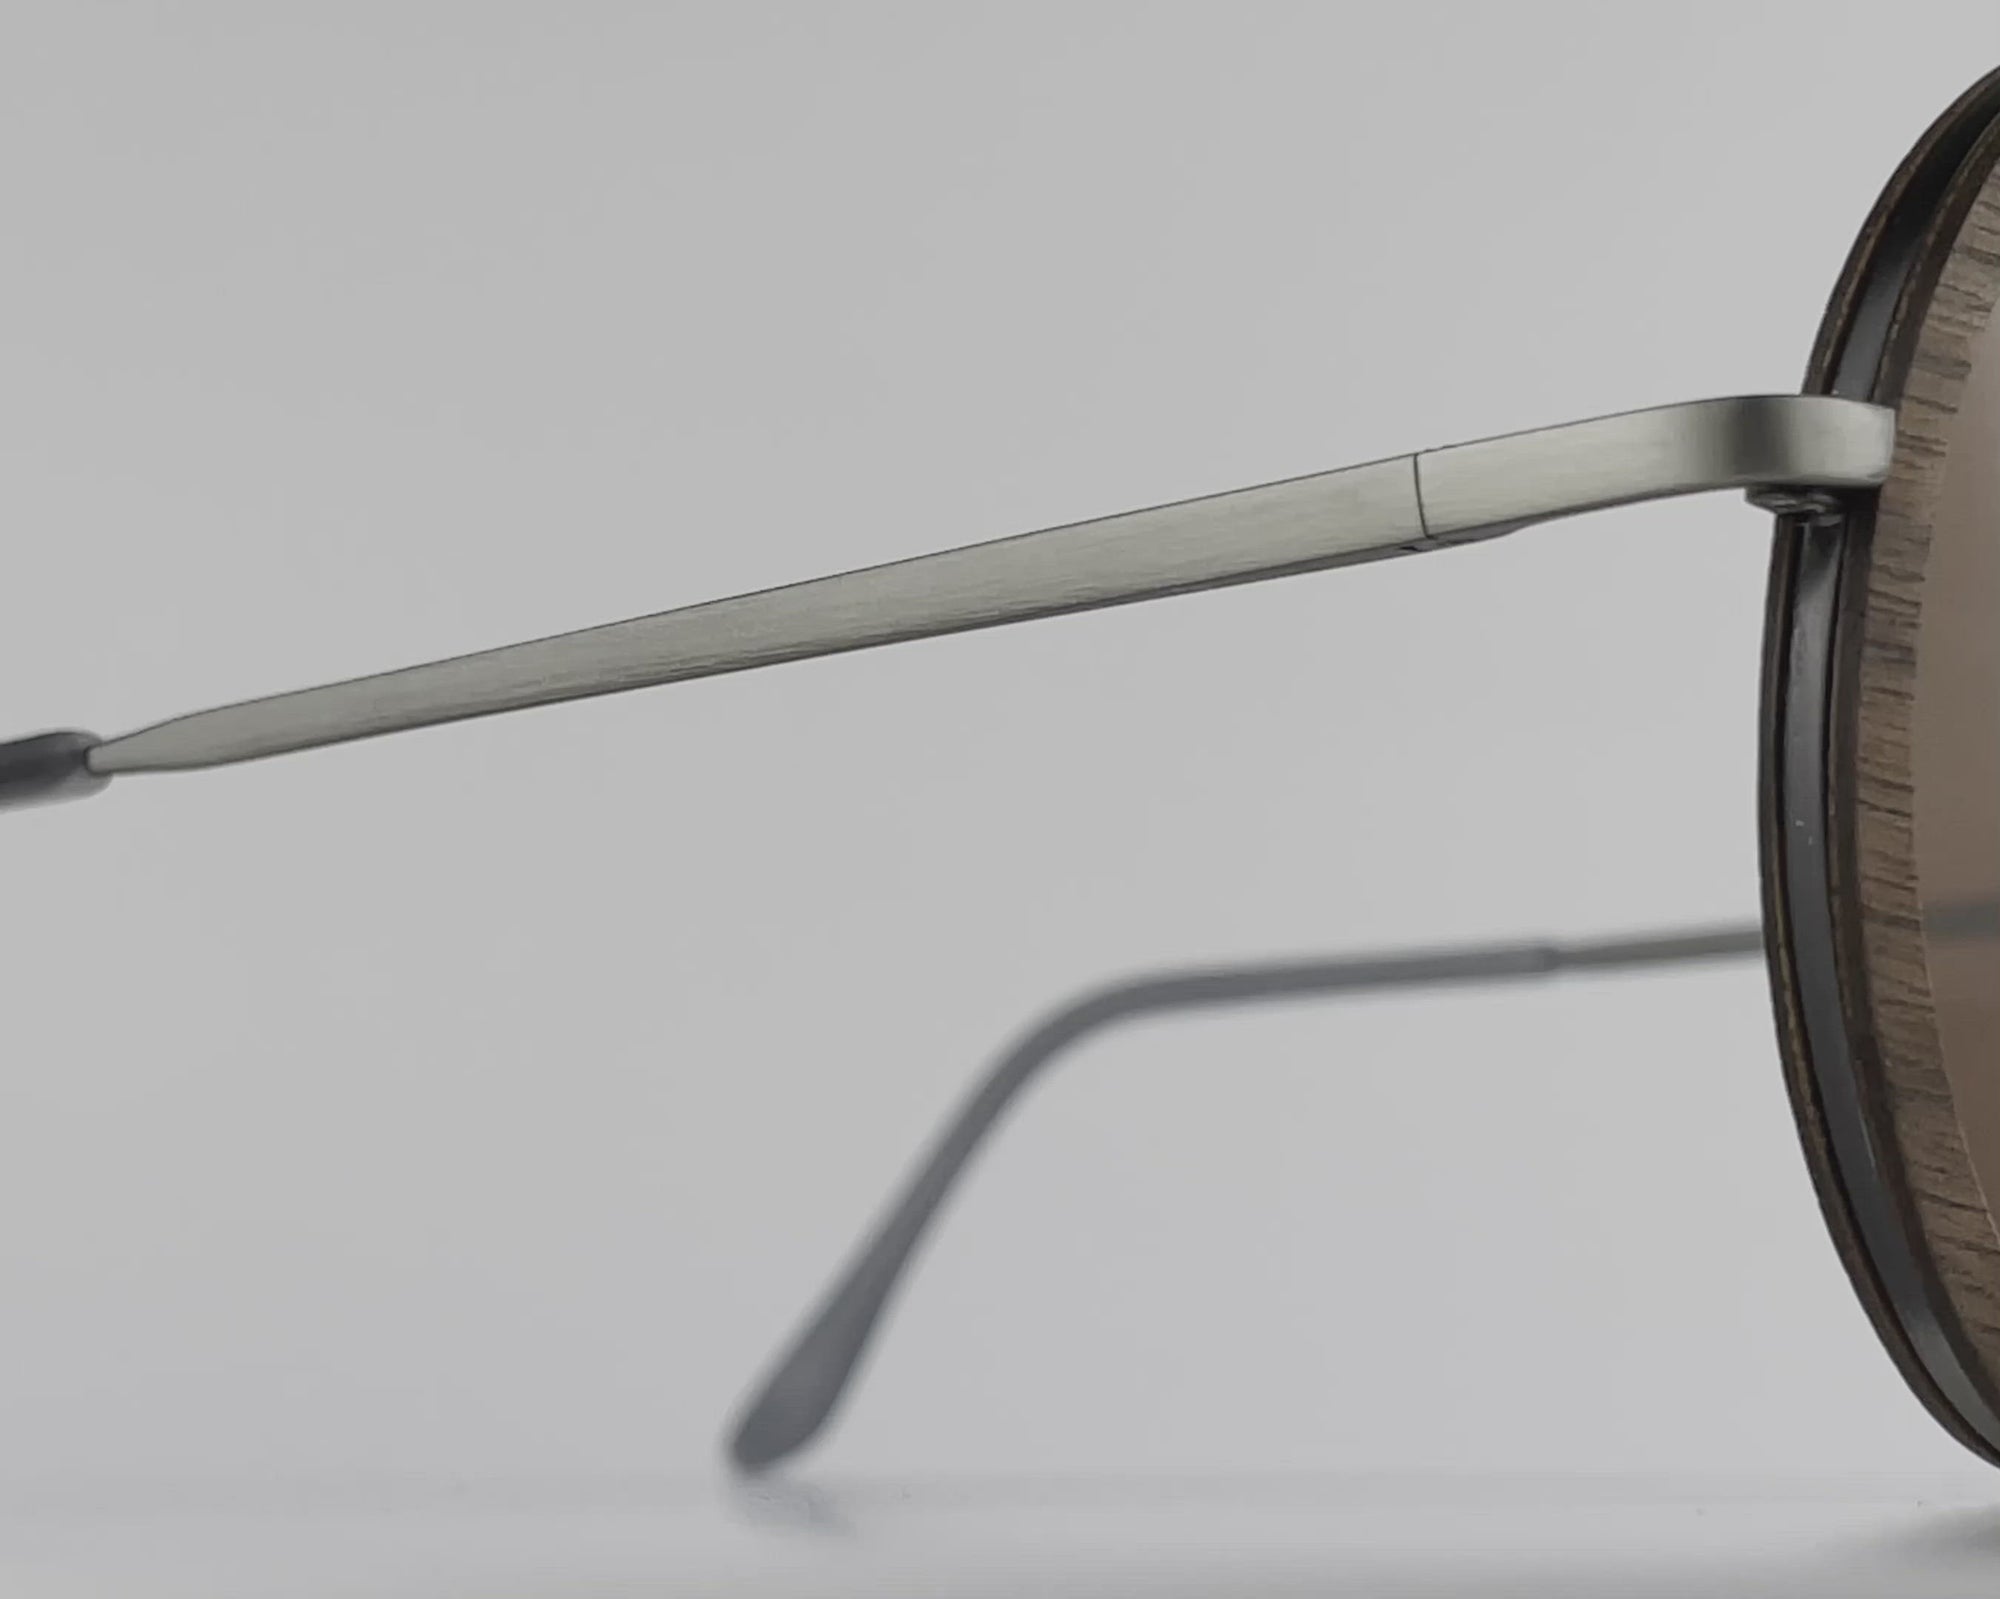 Largo - Metal & Wood Sunglasses